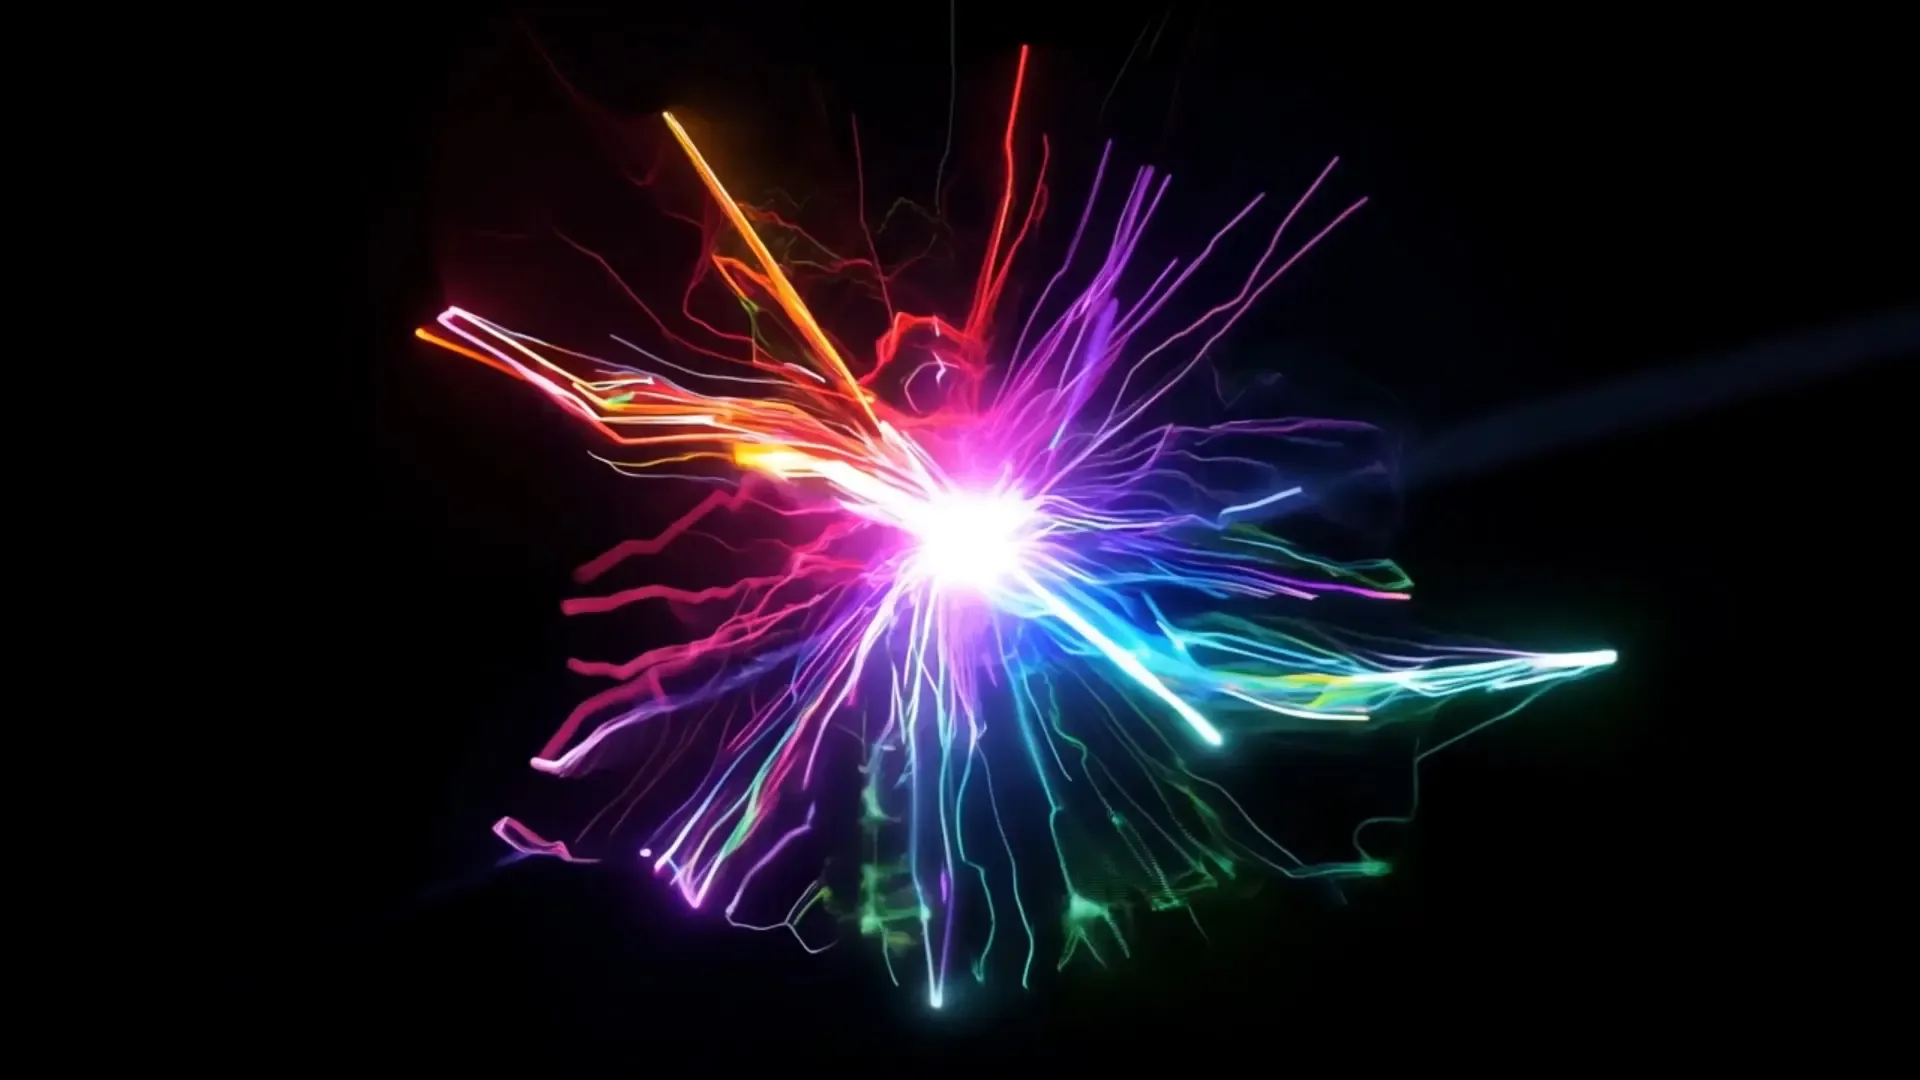 Neon Pulse Overlay with Powerful Energy